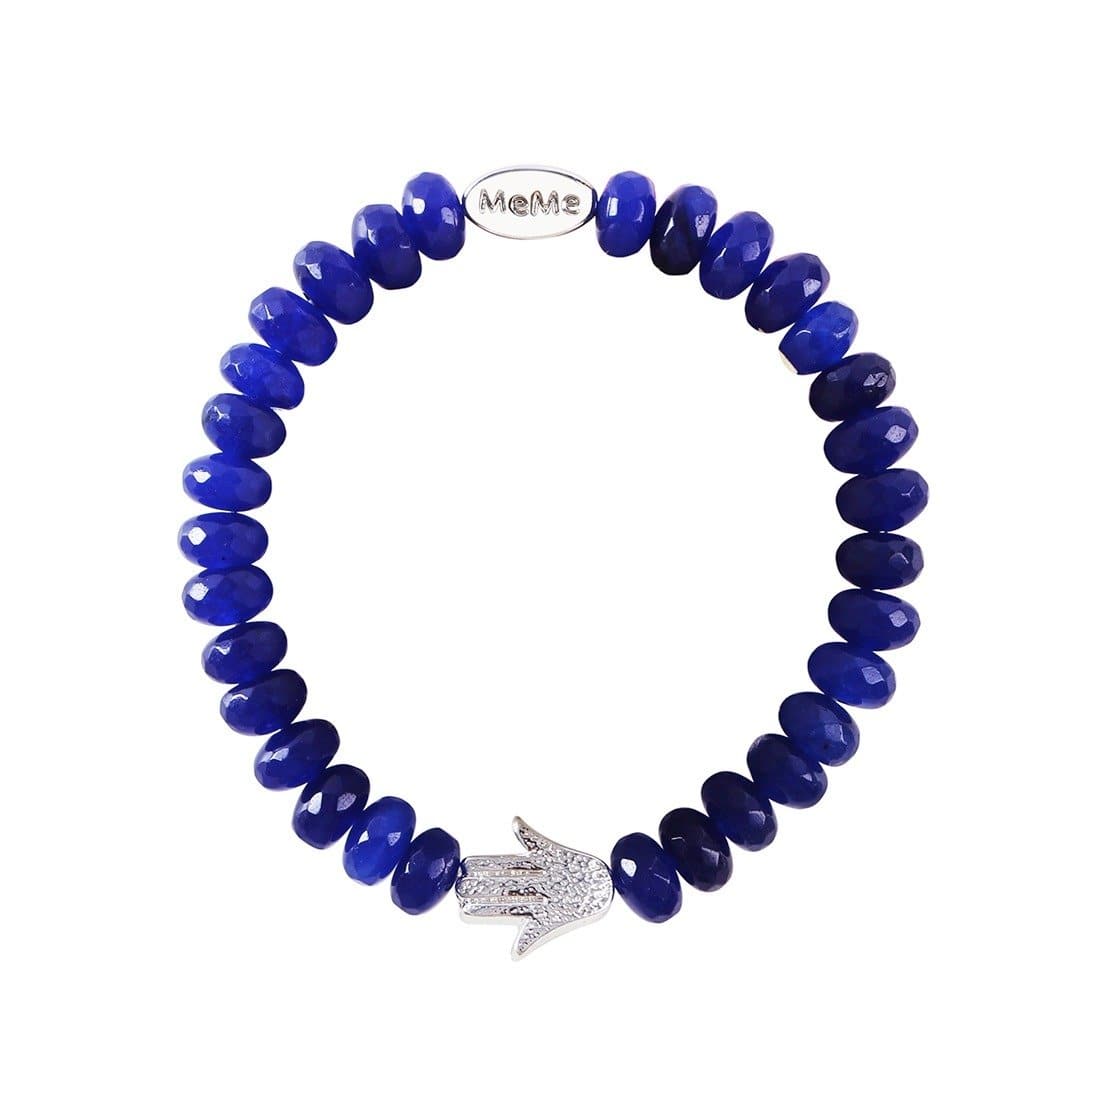 High five men's bracelet - Blue with silver